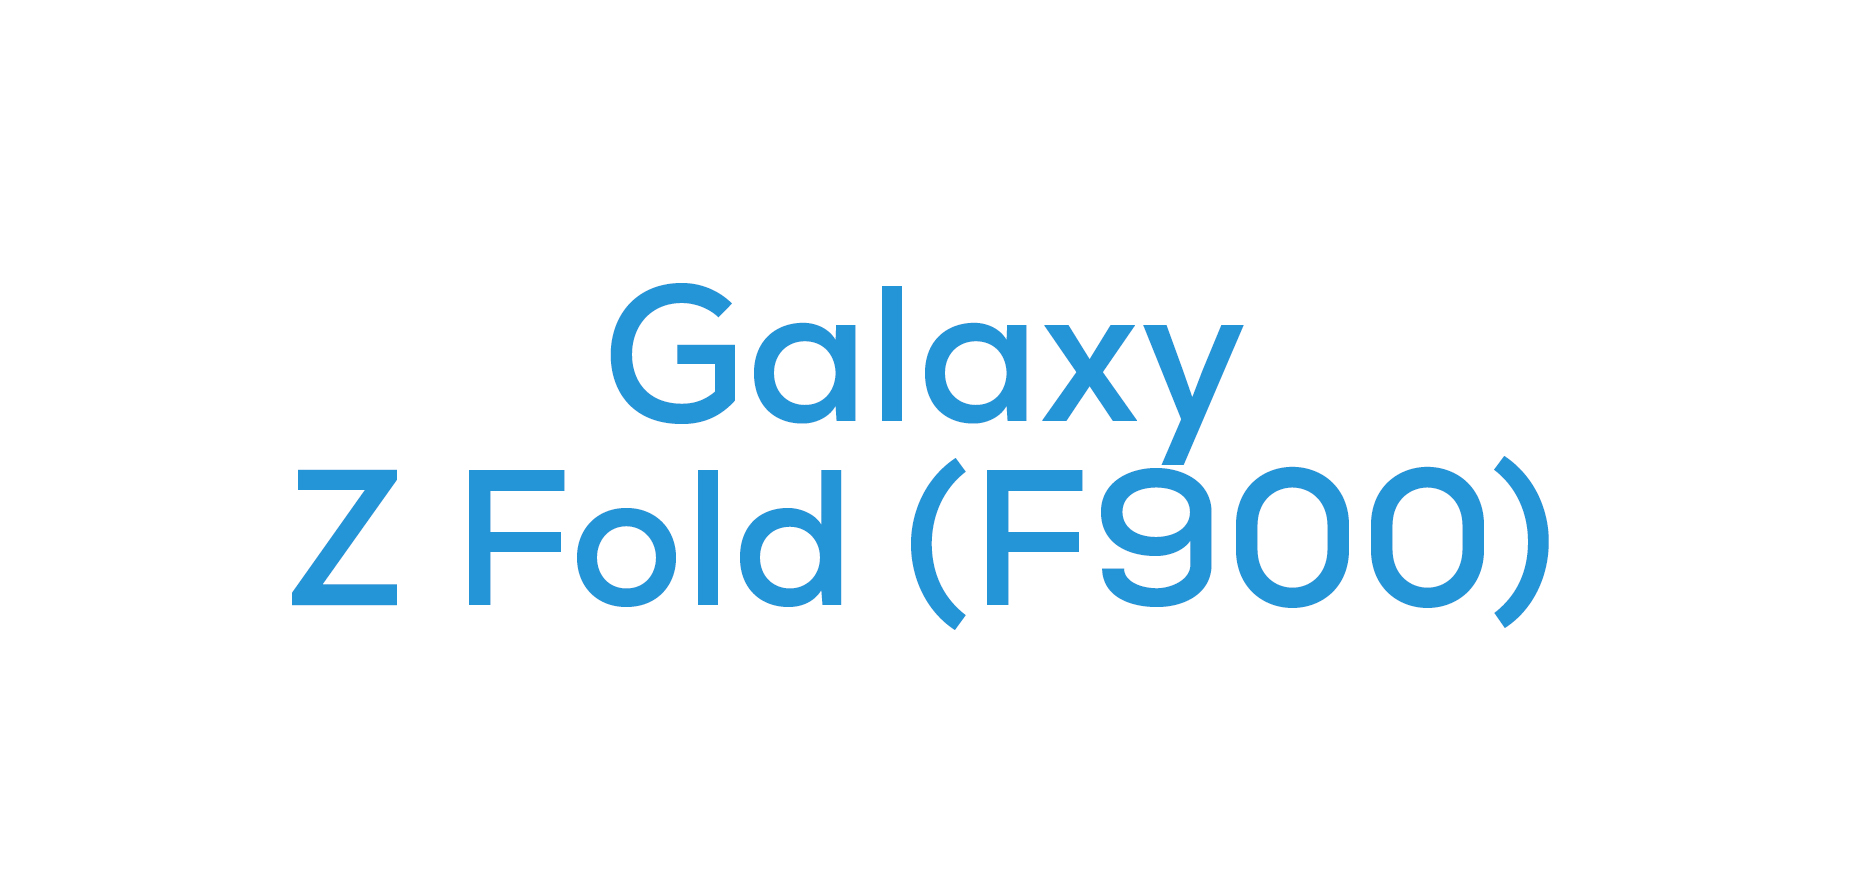 Galaxy Z Fold (F900)